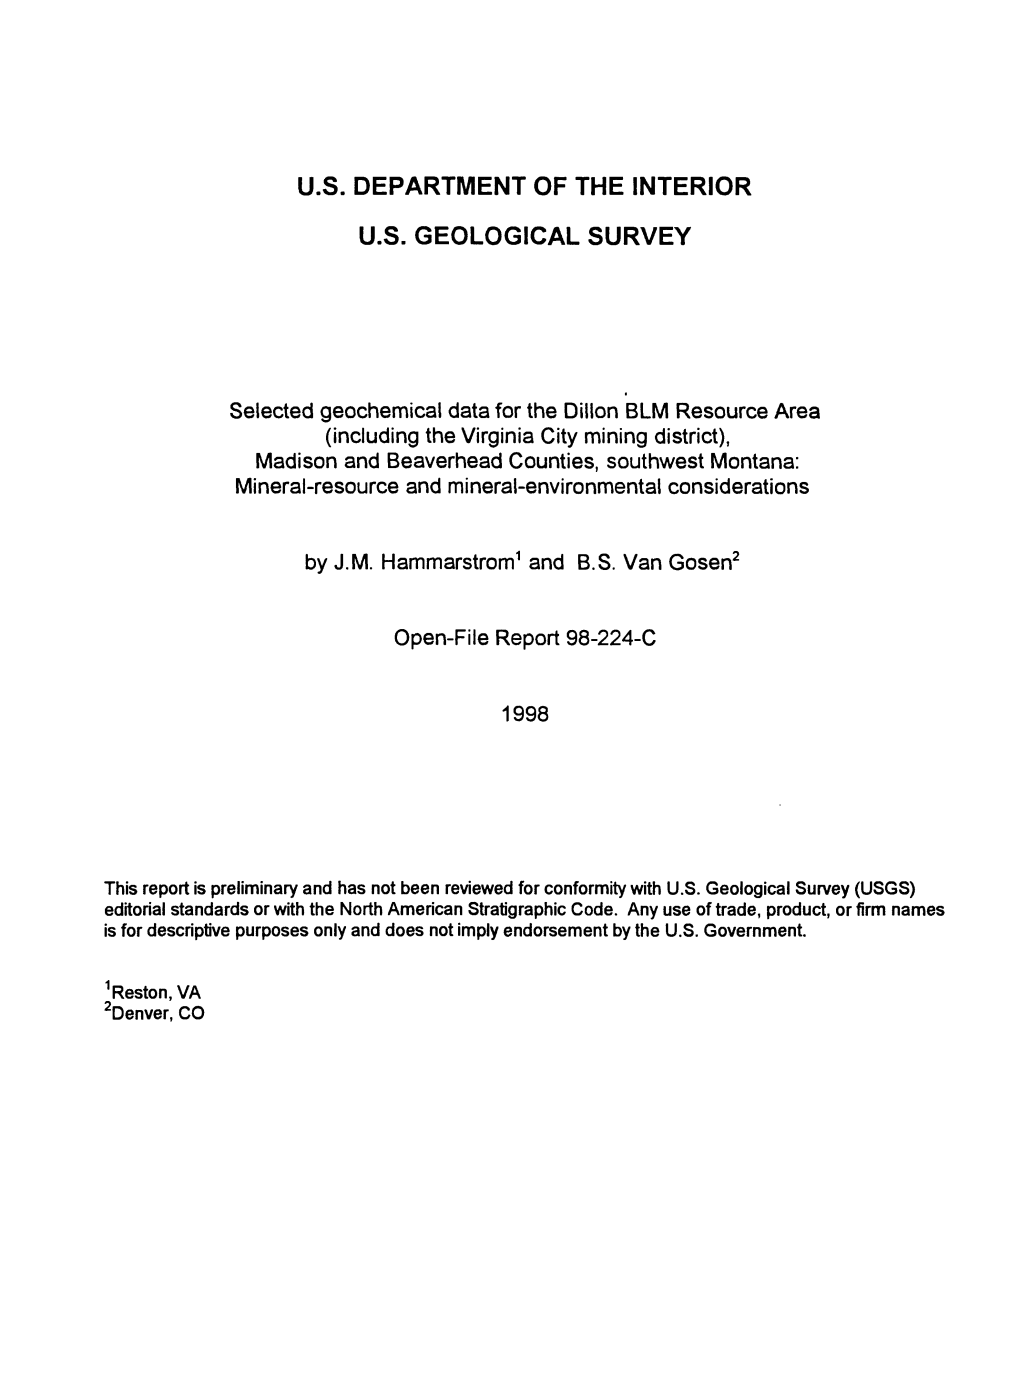 U.S. Department of the Interior U.S. Geological